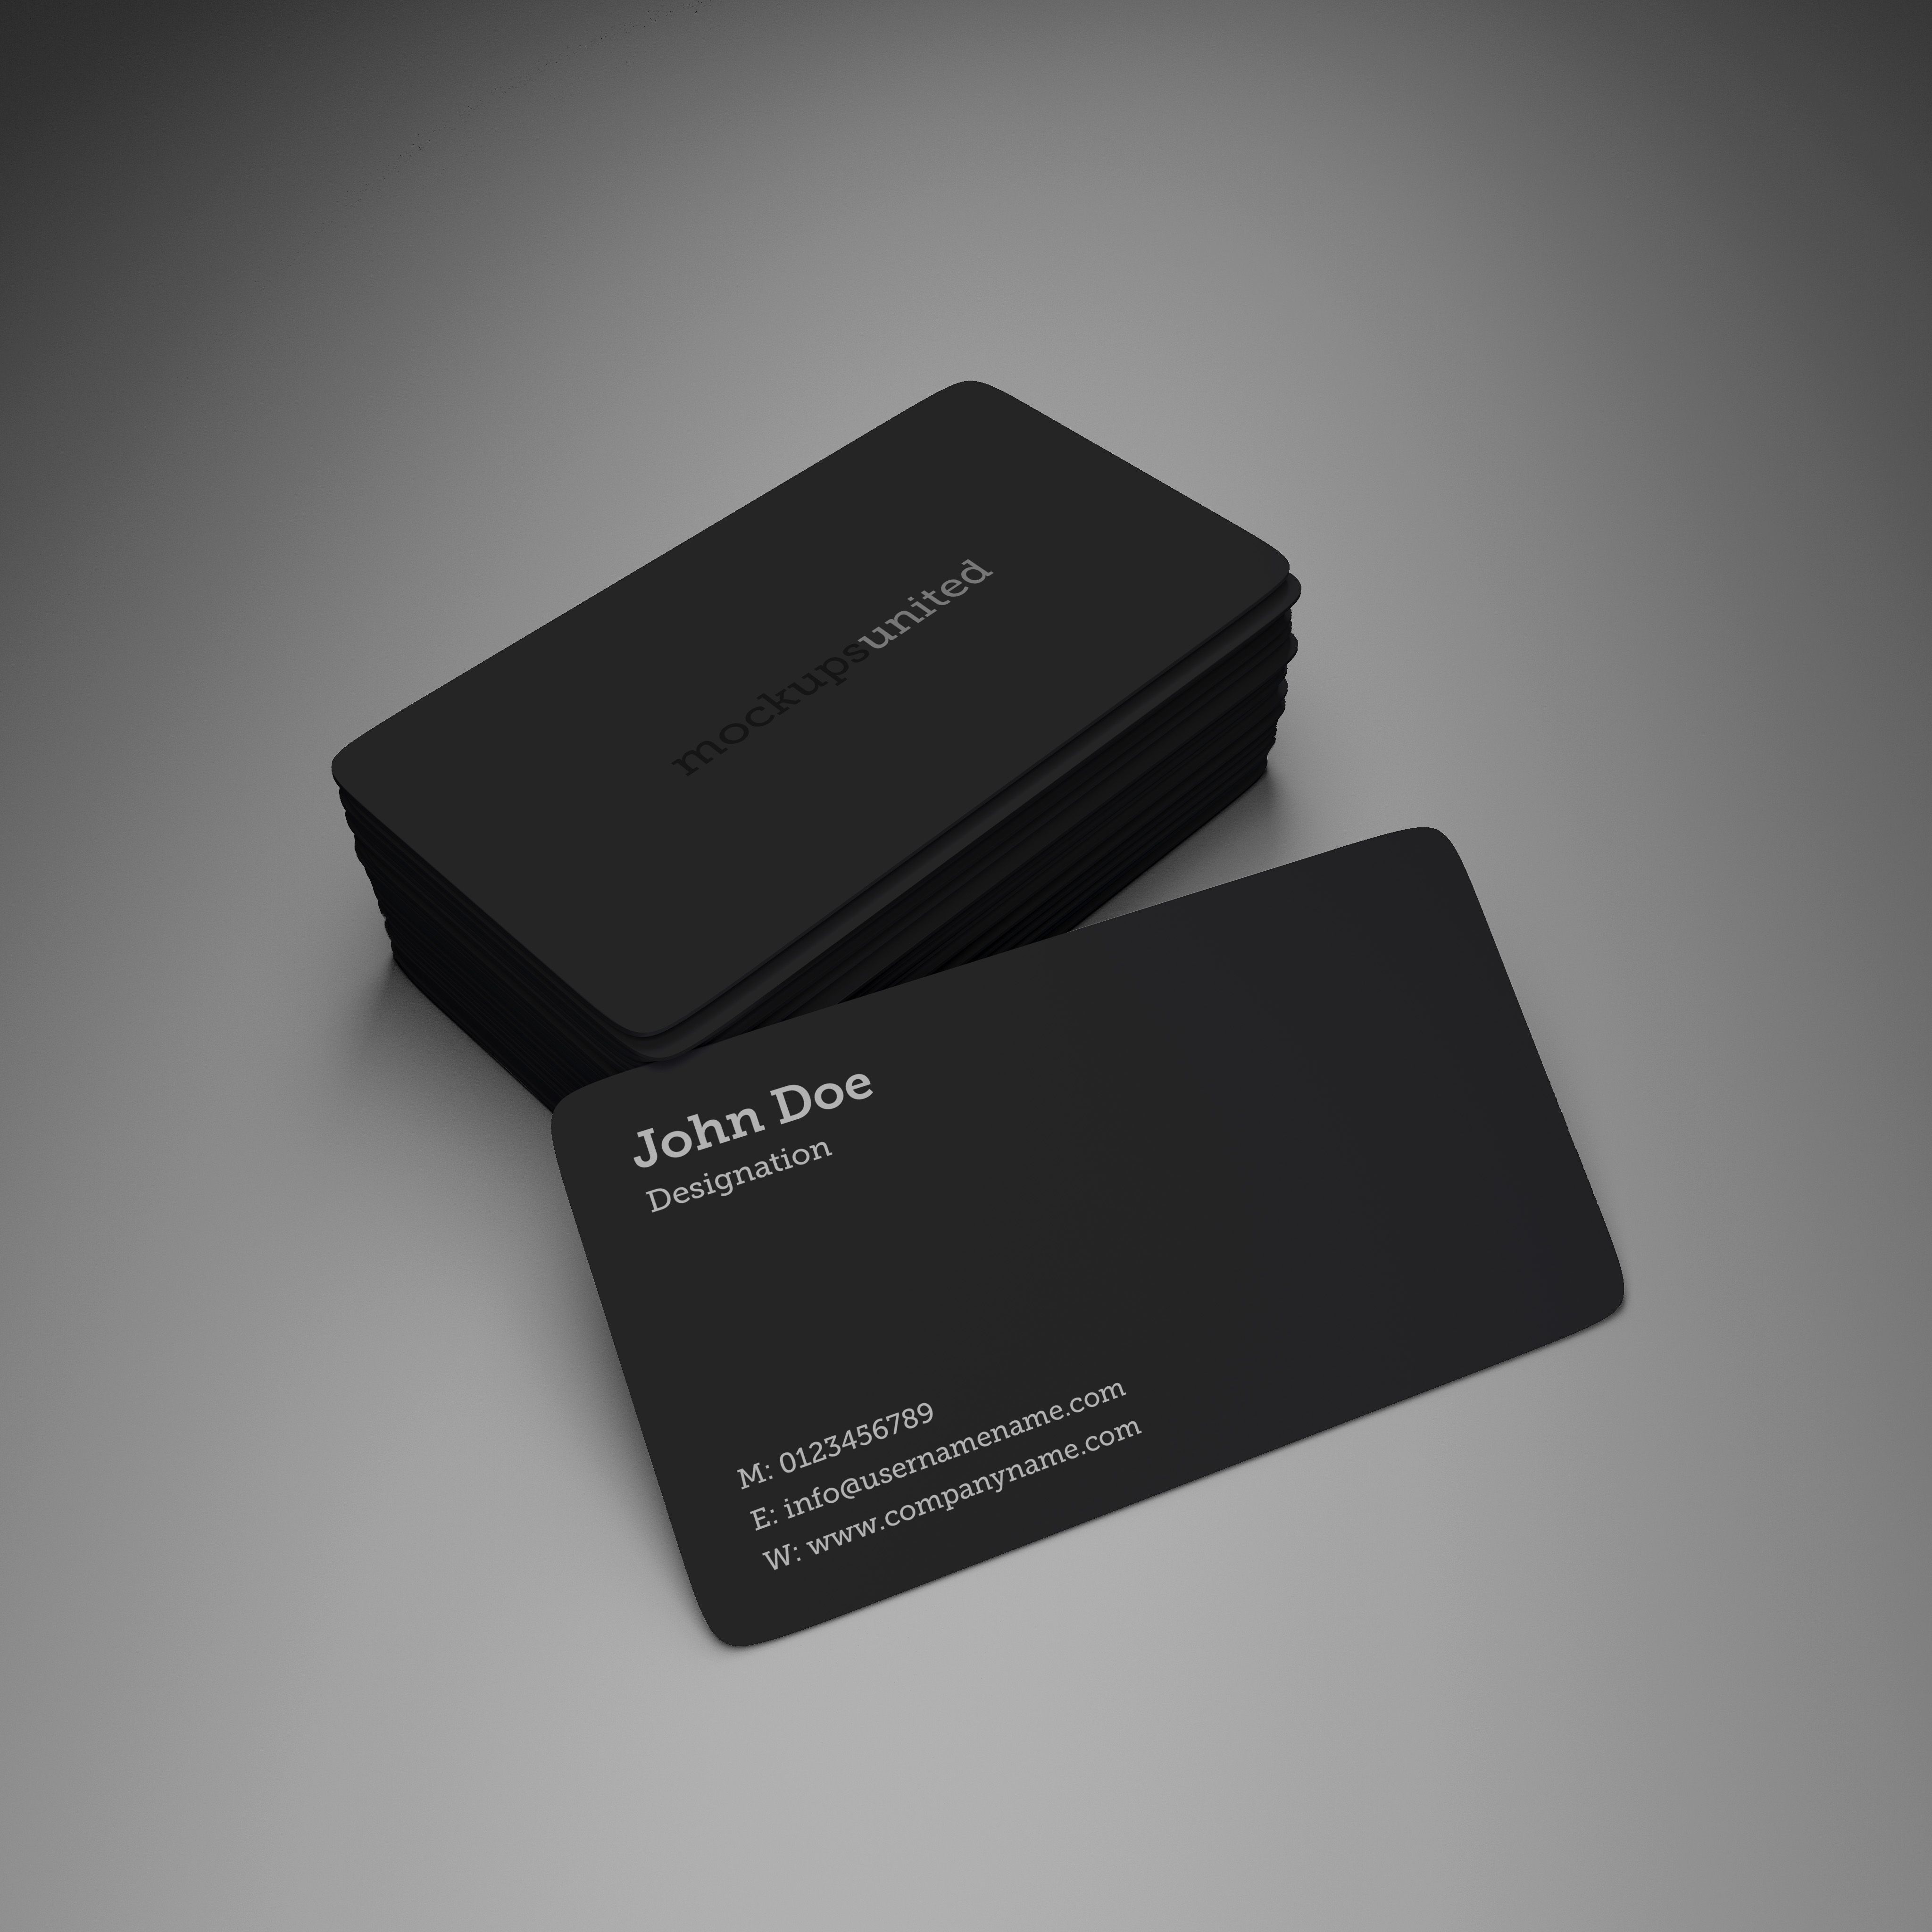 Rounded Corner Business Card Mockup | Product Design | Pinterest